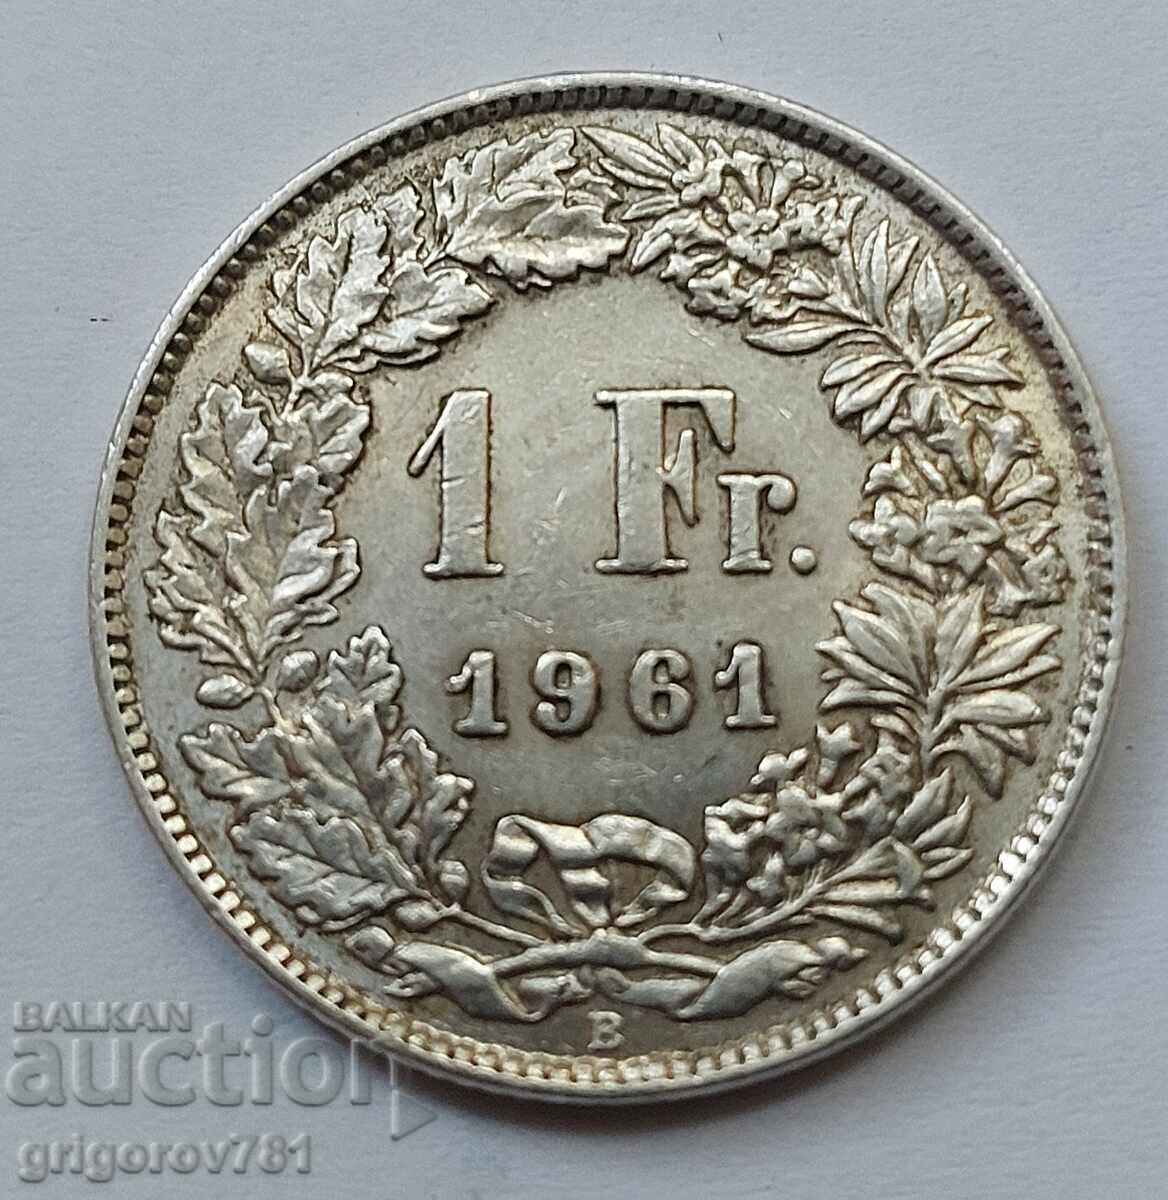 1 Franc Silver Switzerland 1961 B - Silver Coin #13